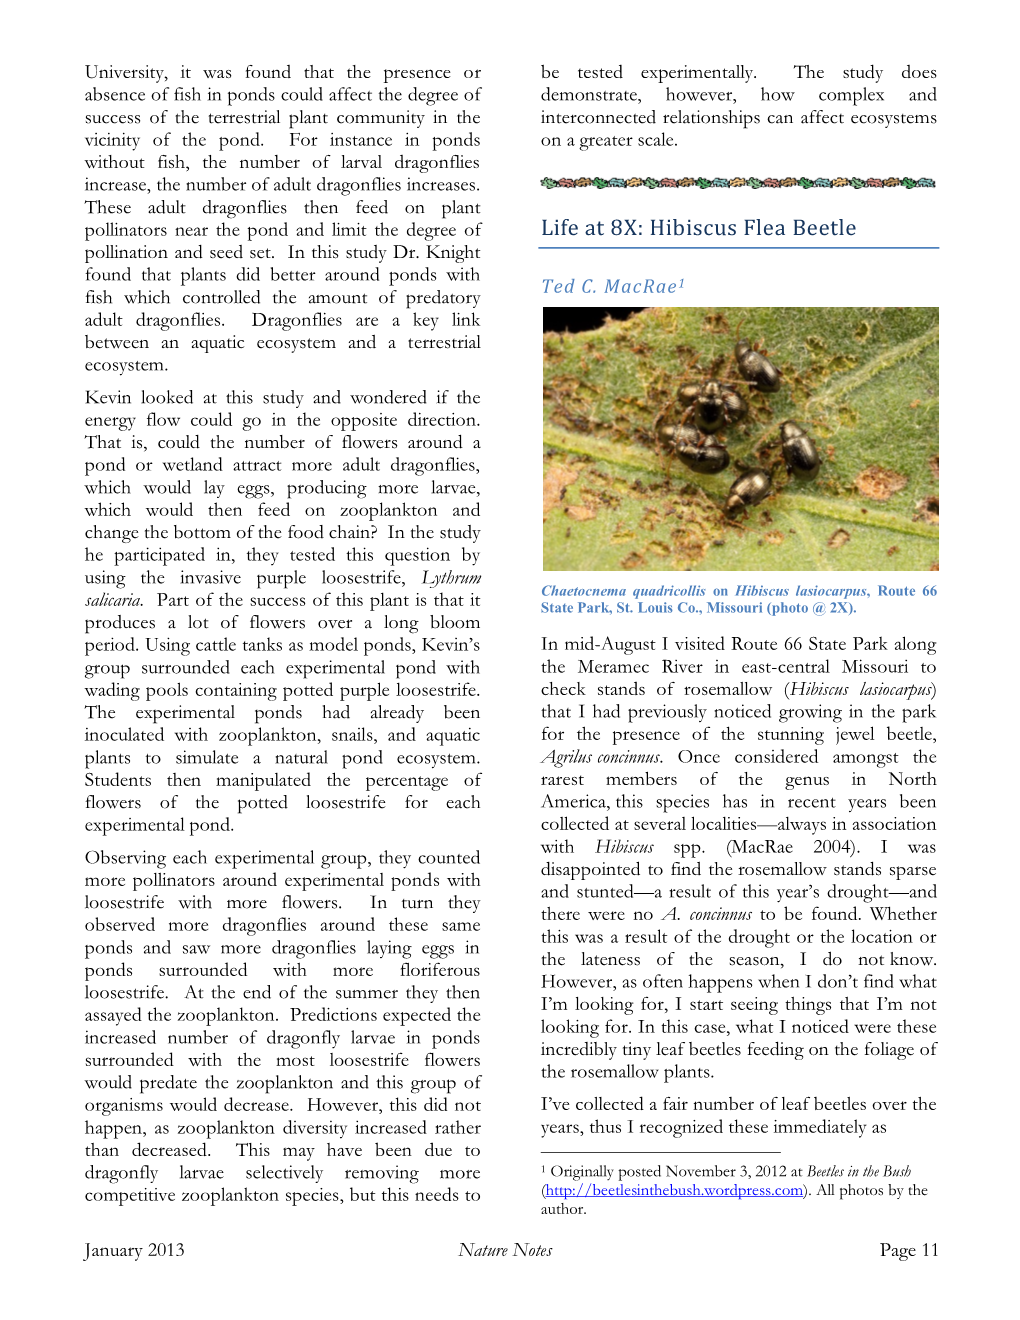 Hibiscus Flea Beetle Pollination and Seed Set